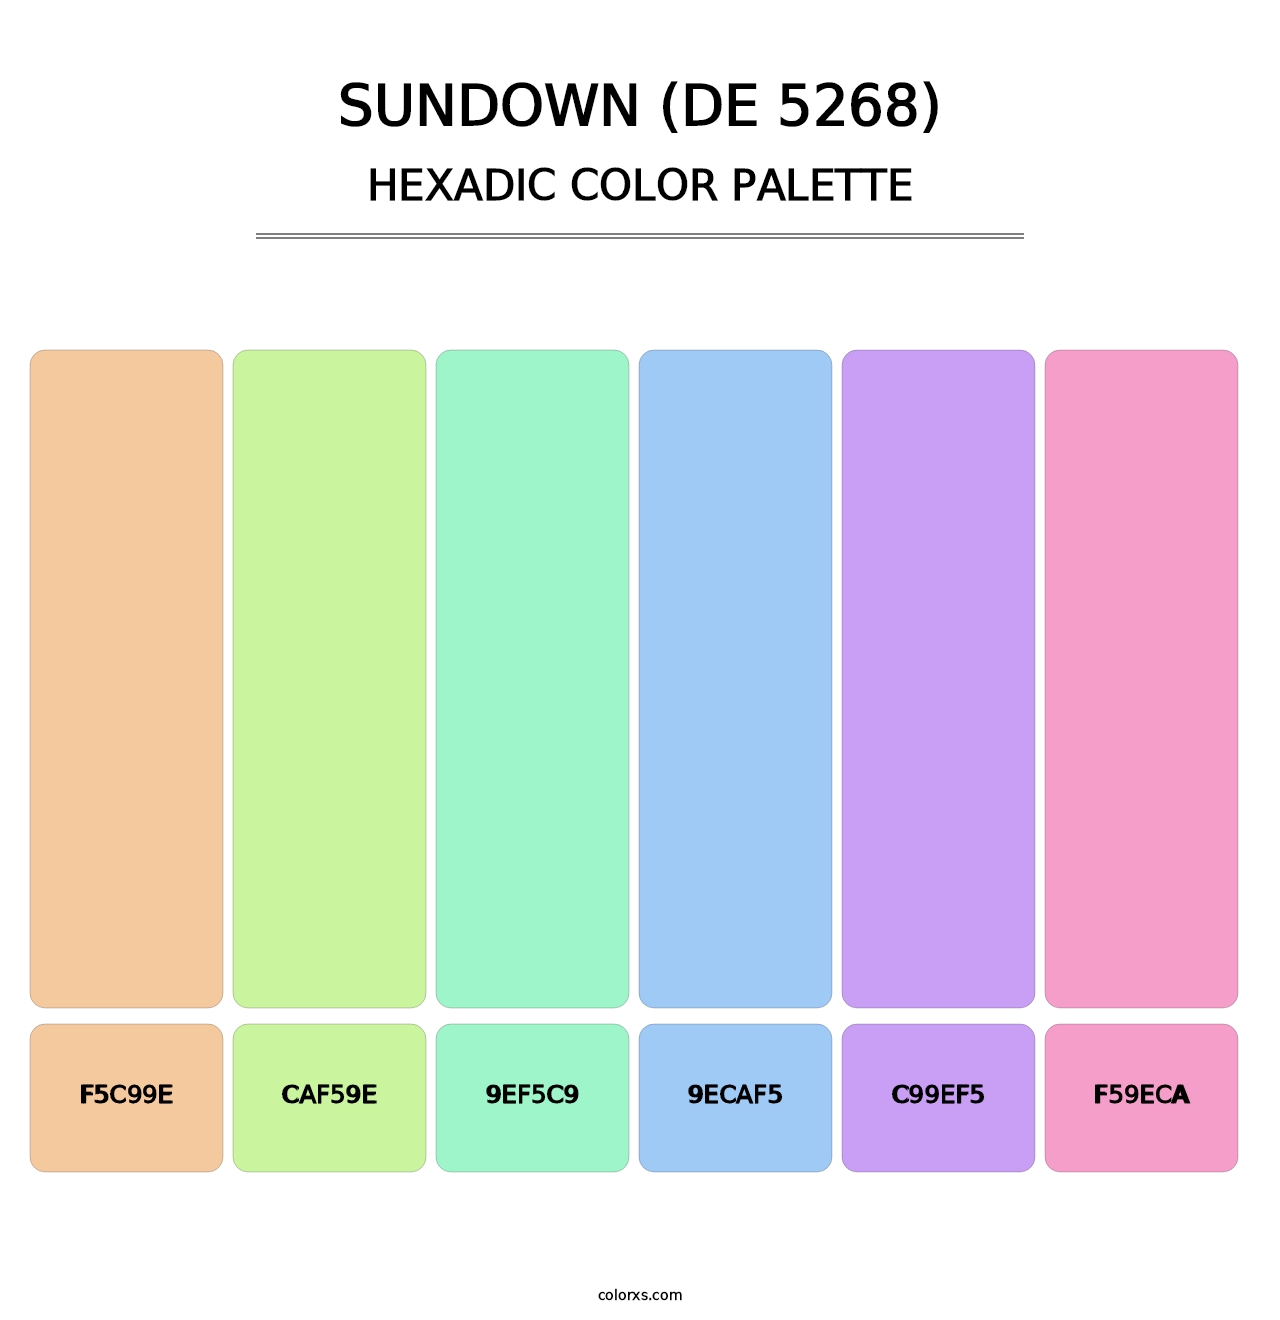 Sundown (DE 5268) - Hexadic Color Palette